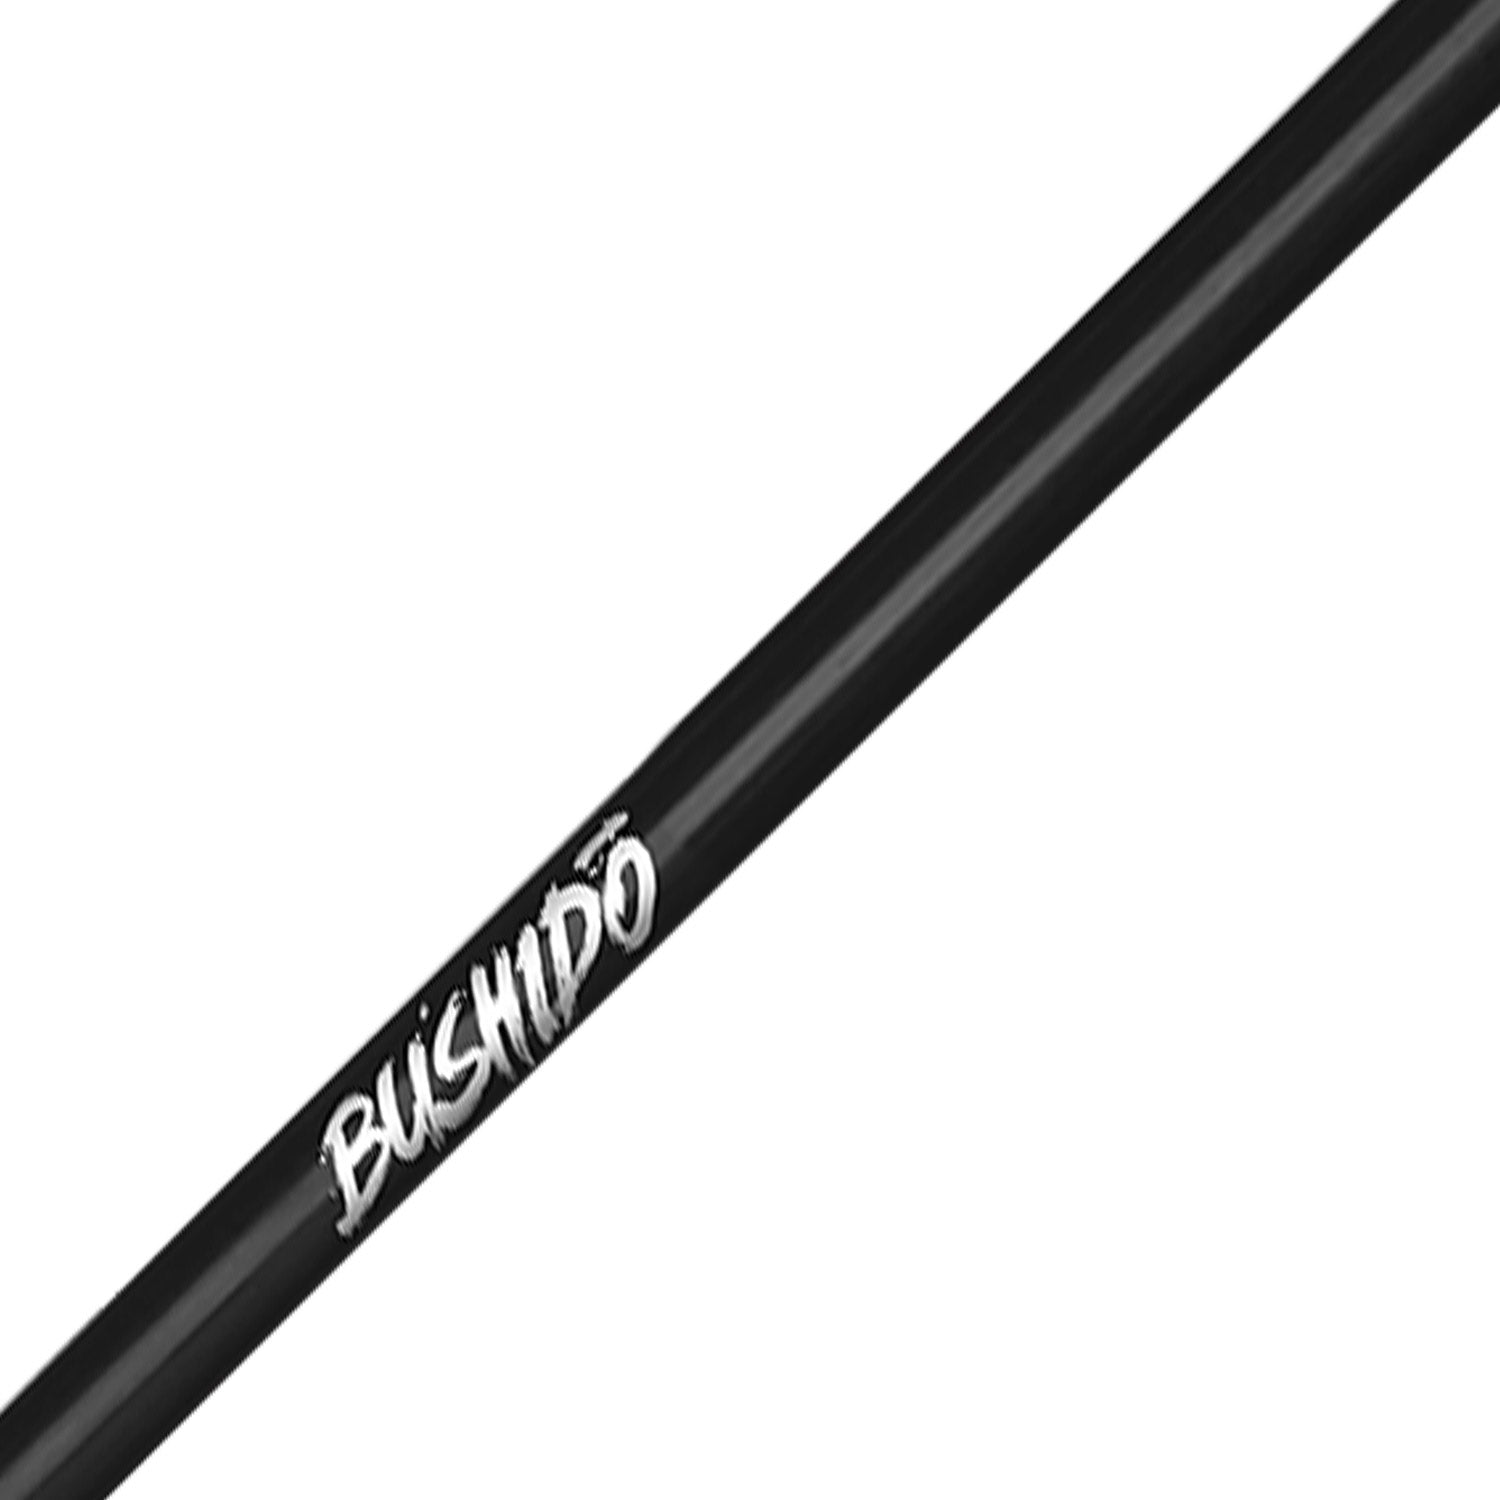 Bushido Popping/Crank Bait Rod Blank CB78/10-20